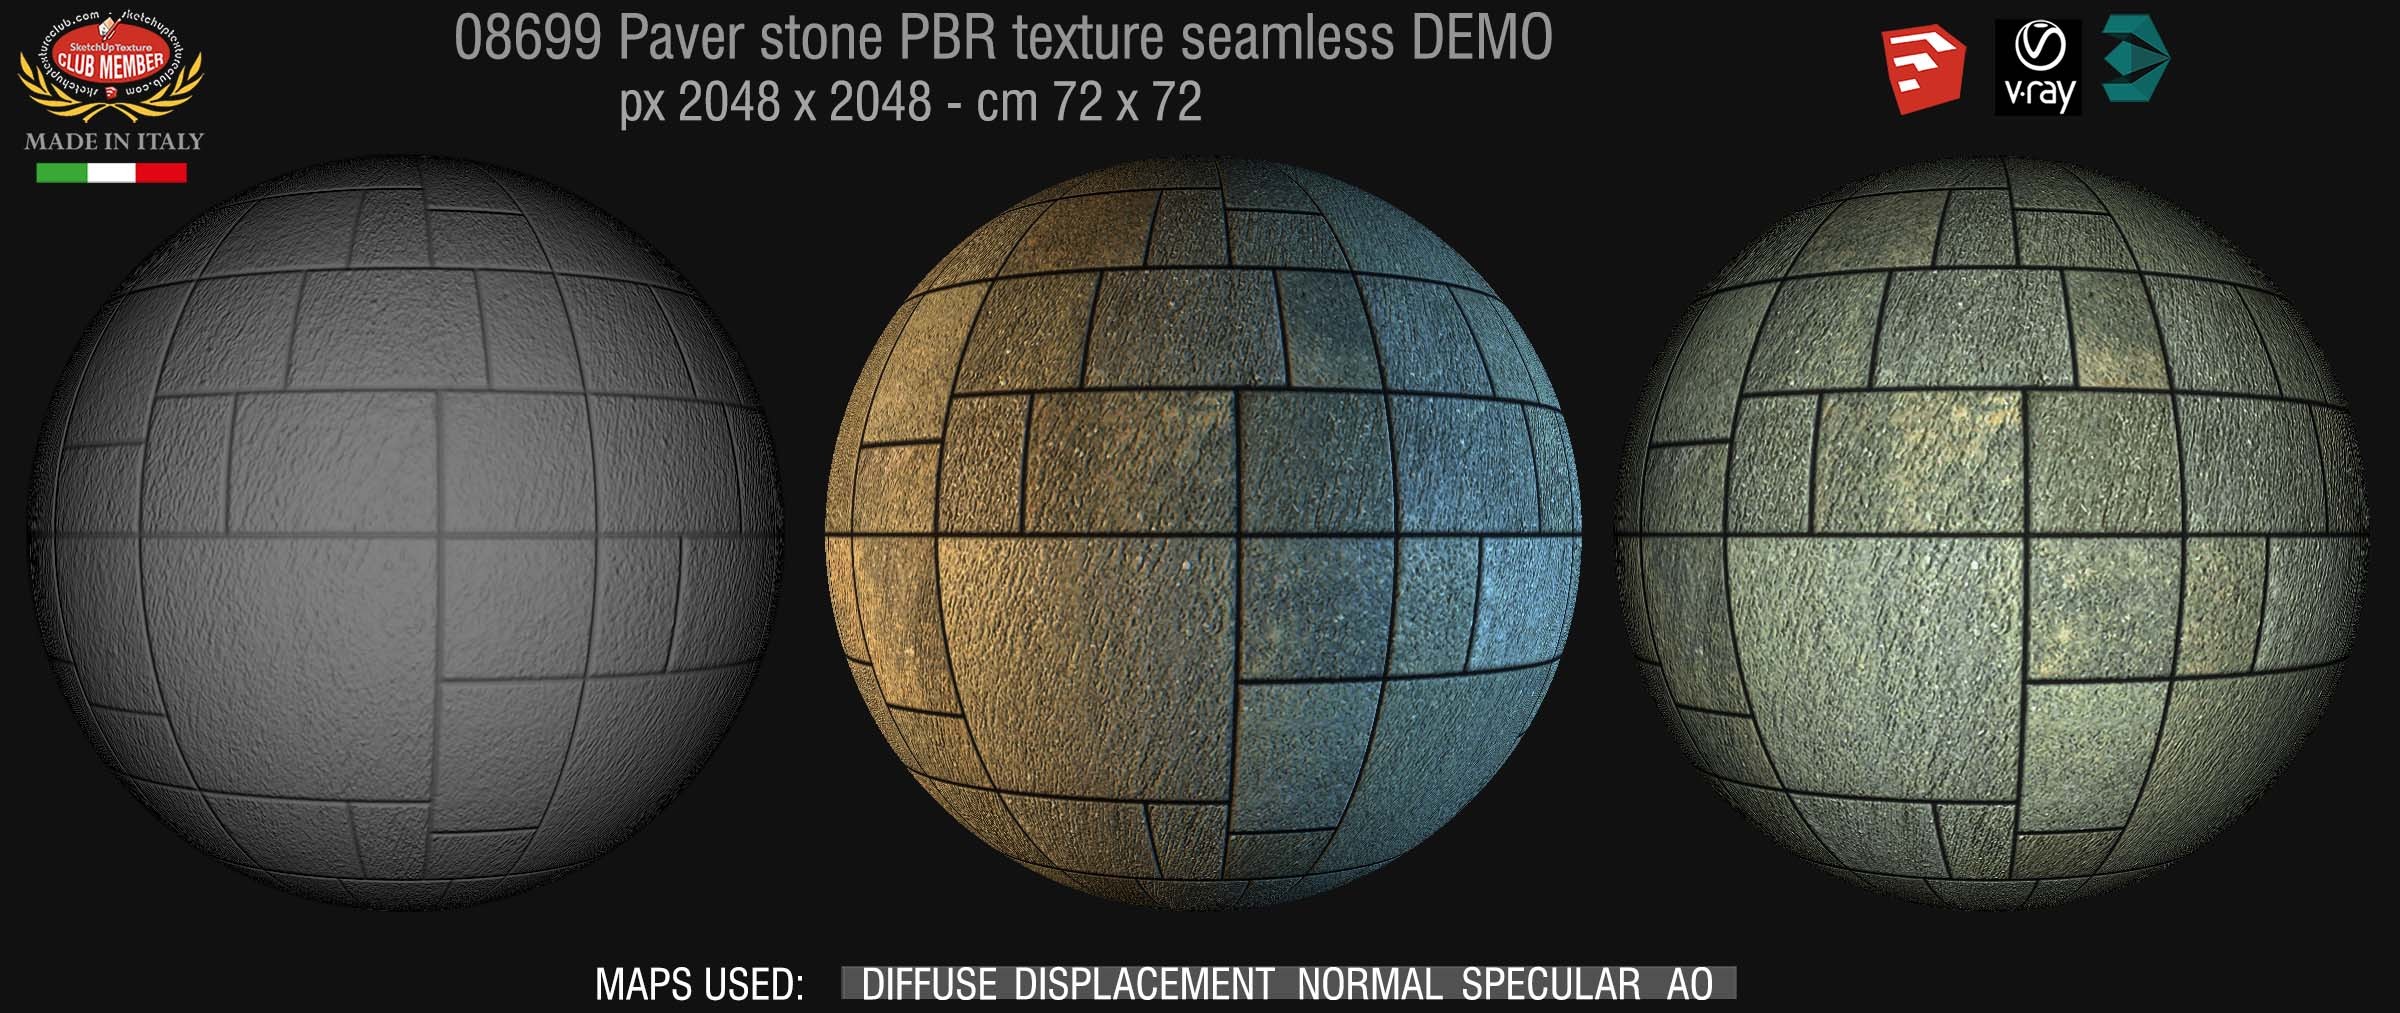 08699 paver stone PBR texture seamless DEMO